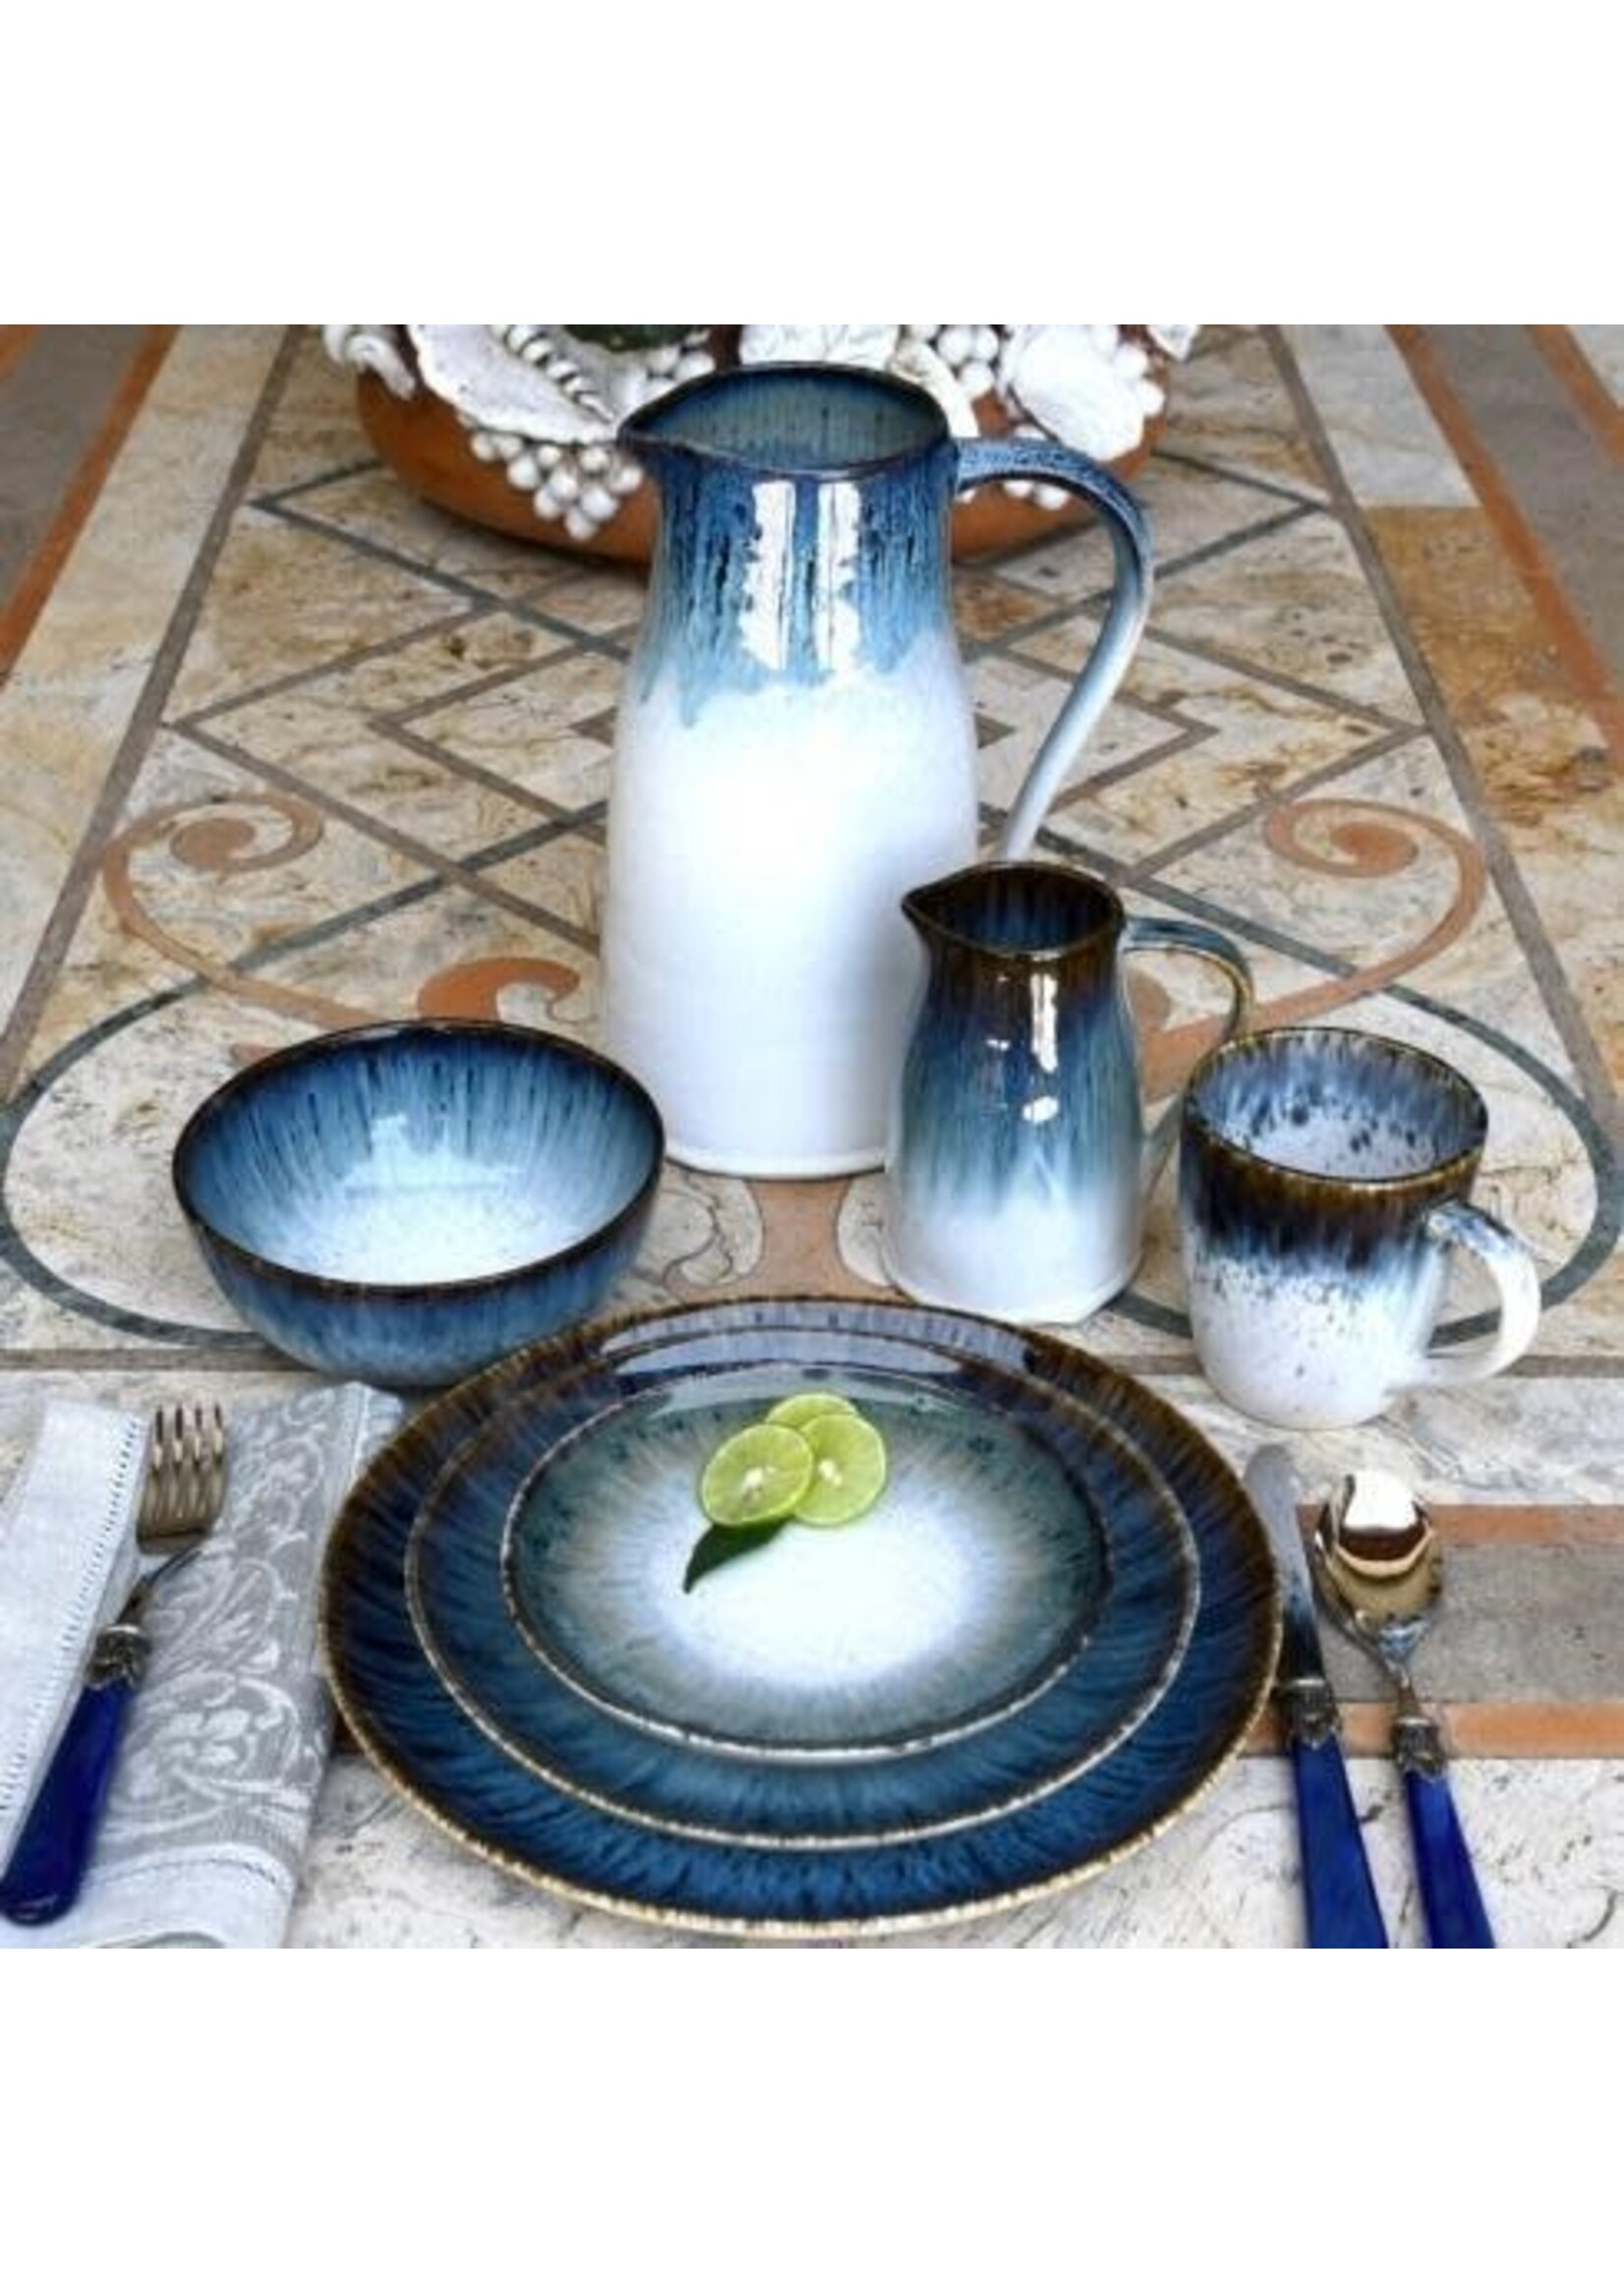 Carmel Ceramica Cypress Grove Appetizer Plate